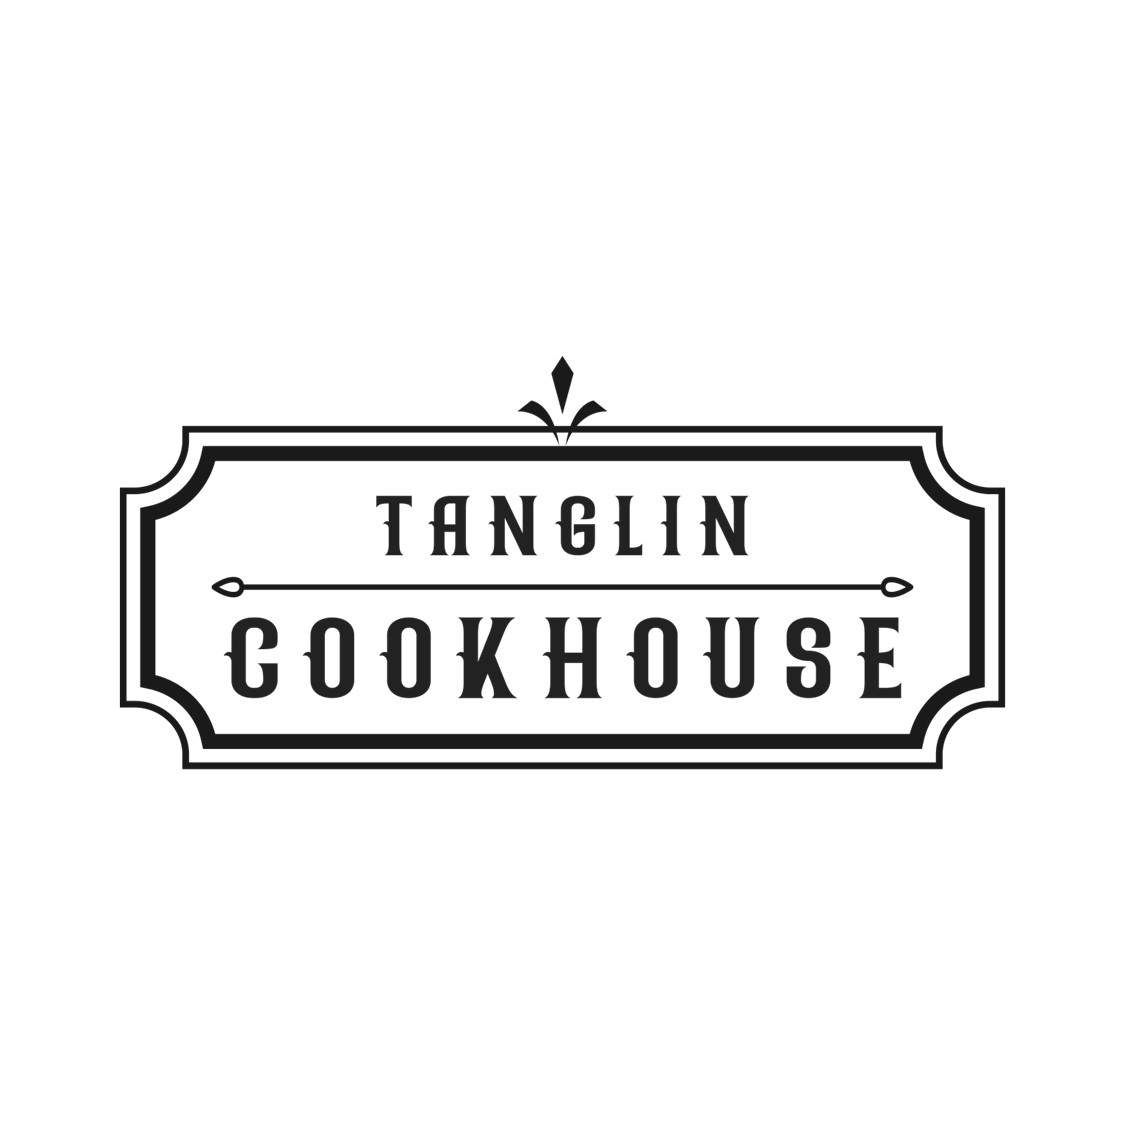 Tanglin Cookhouse Logo.jpg